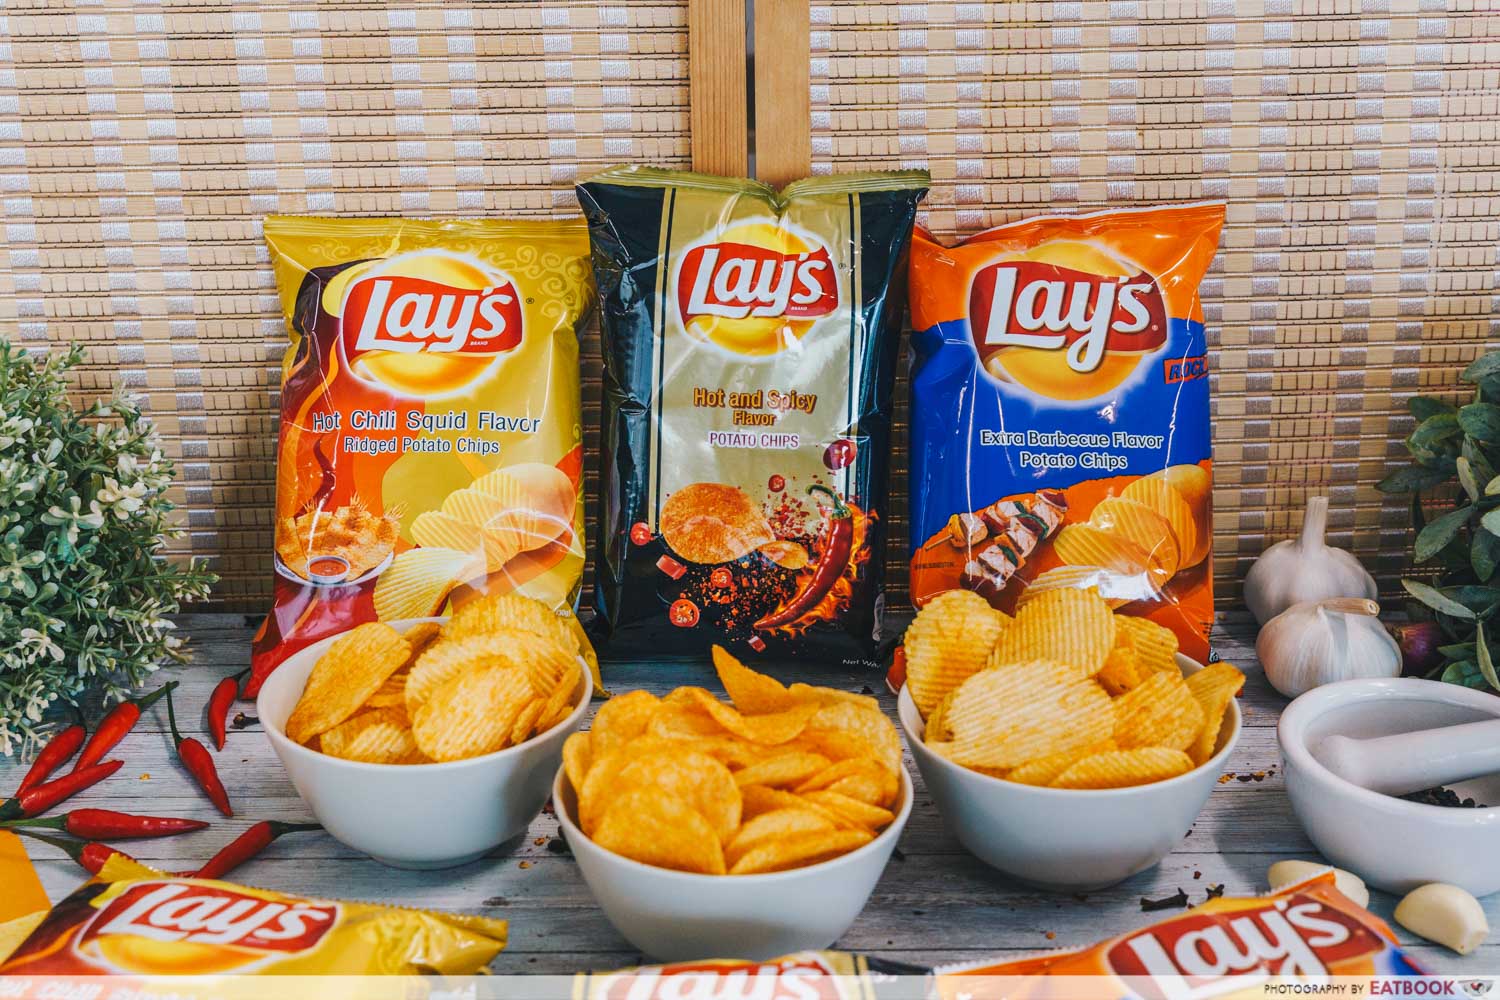 lay's potato chips - intro shot